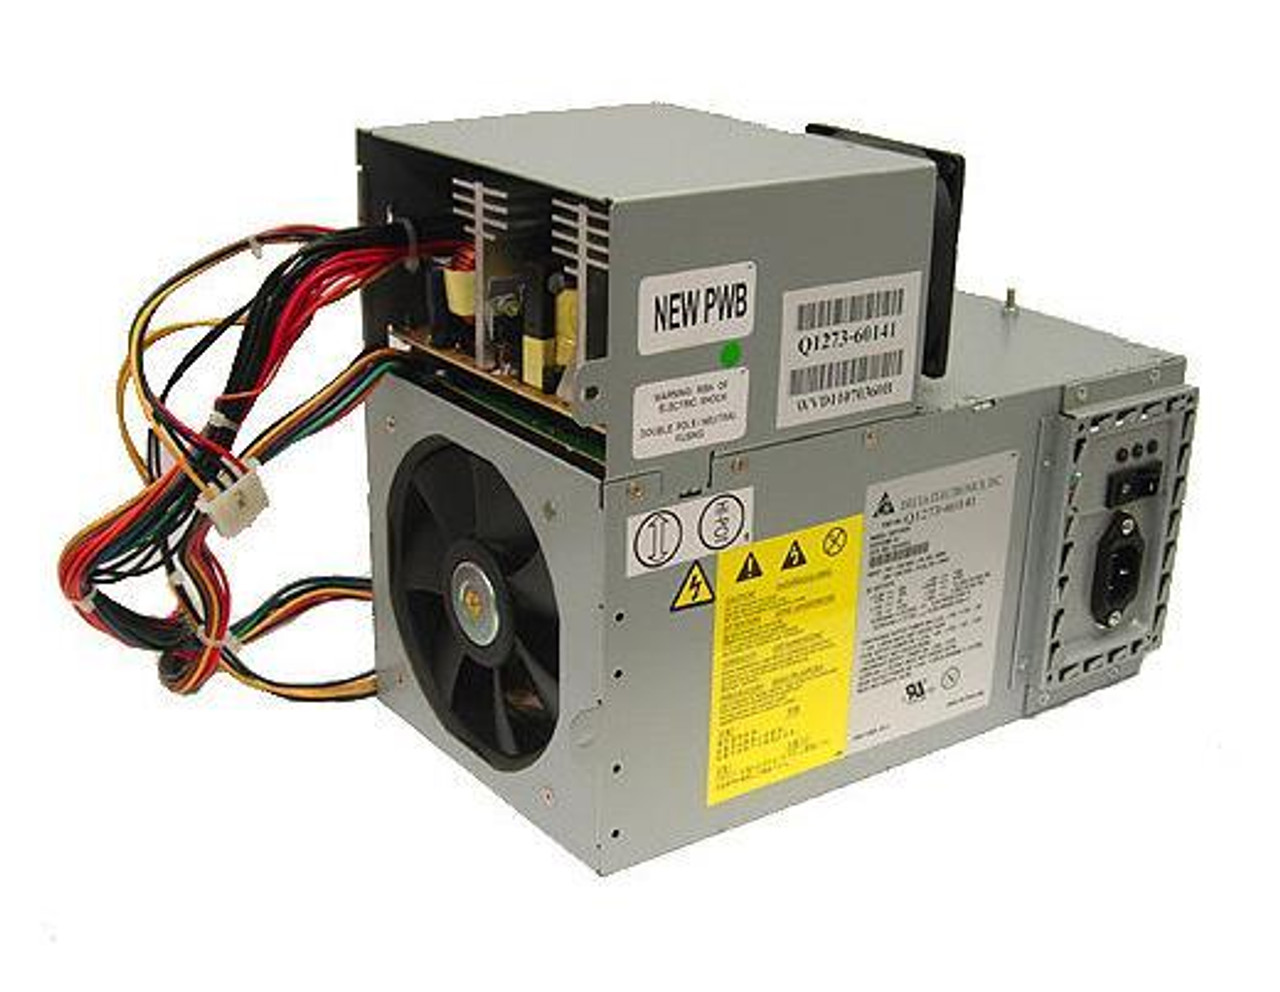 Q1273-60251 HP 500-Watts 100-240V AC Power Supply for DesignJet 4000/ 4500 Series Printer